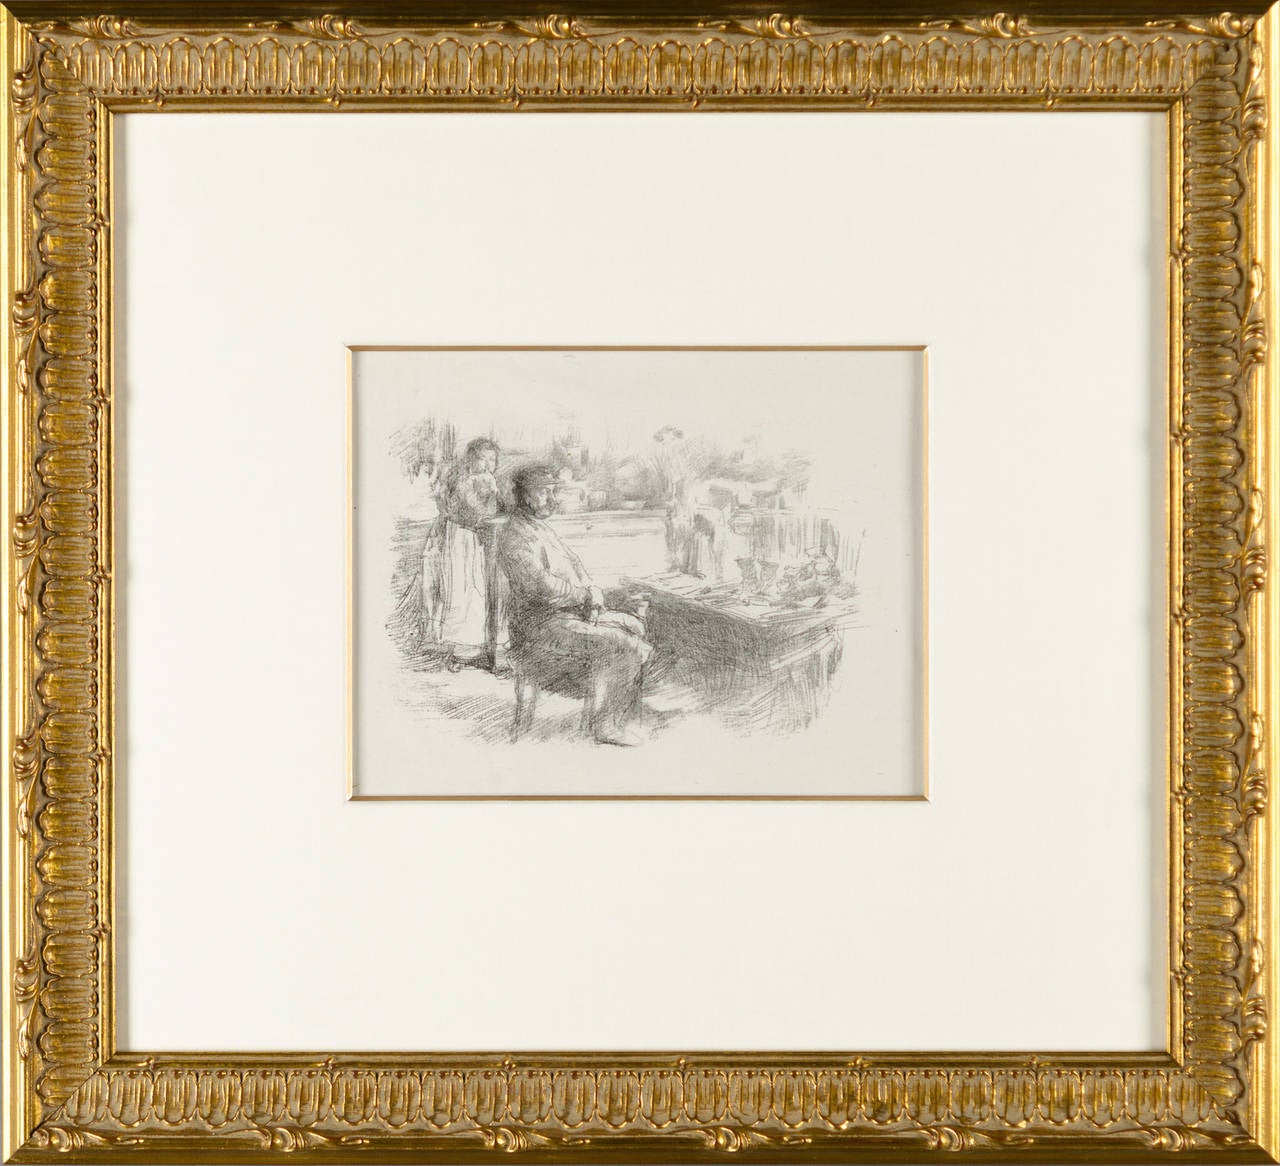 The Shoemaker - Print by James Abbott McNeill Whistler